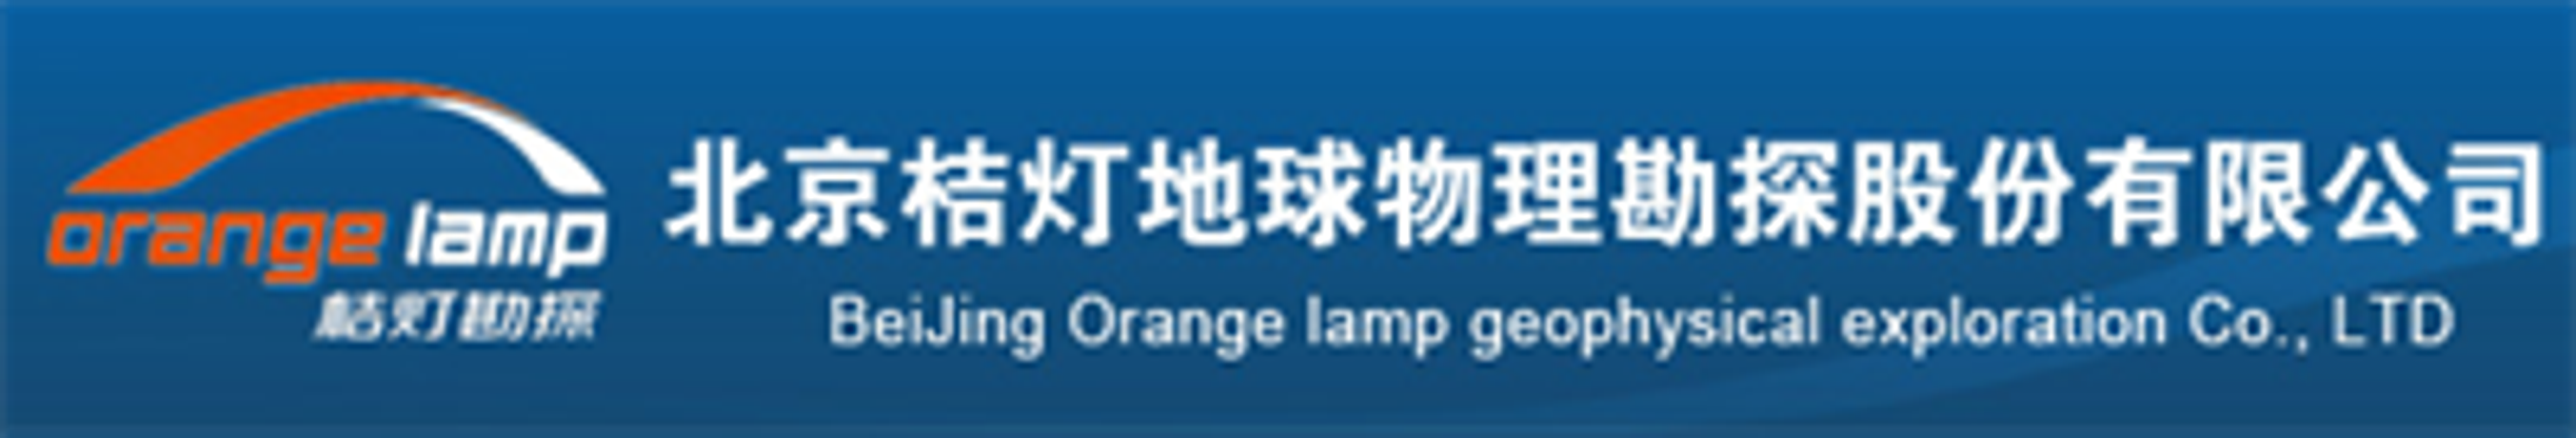 Orangelamp - Geothermal Resource Investigation Services